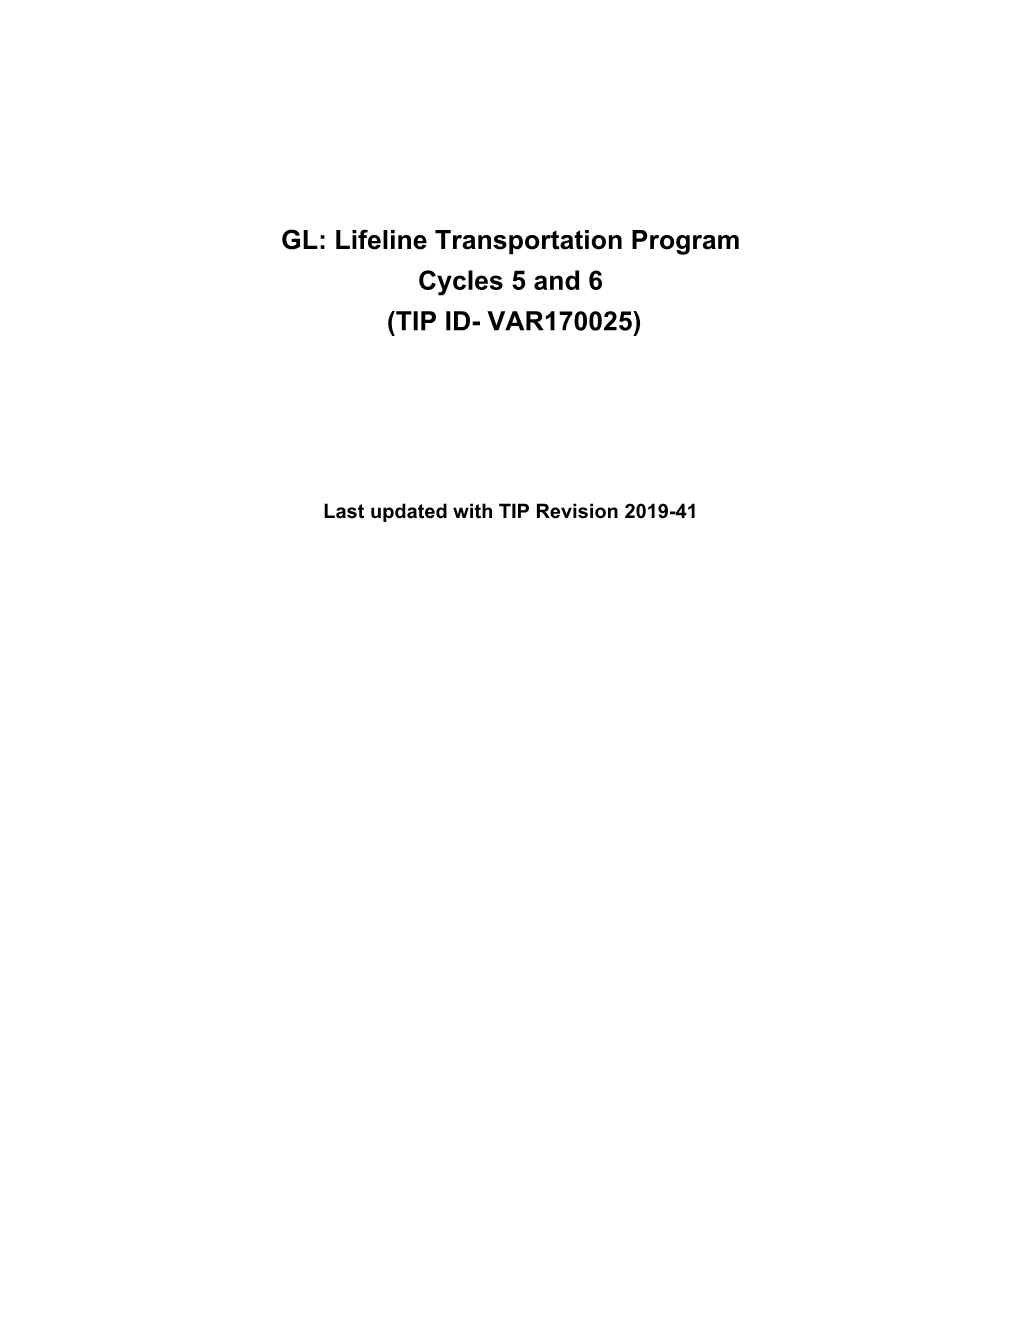 GL: Lifeline Transportation Program Cycles 5 and 6 (TIP ID- VAR170025)